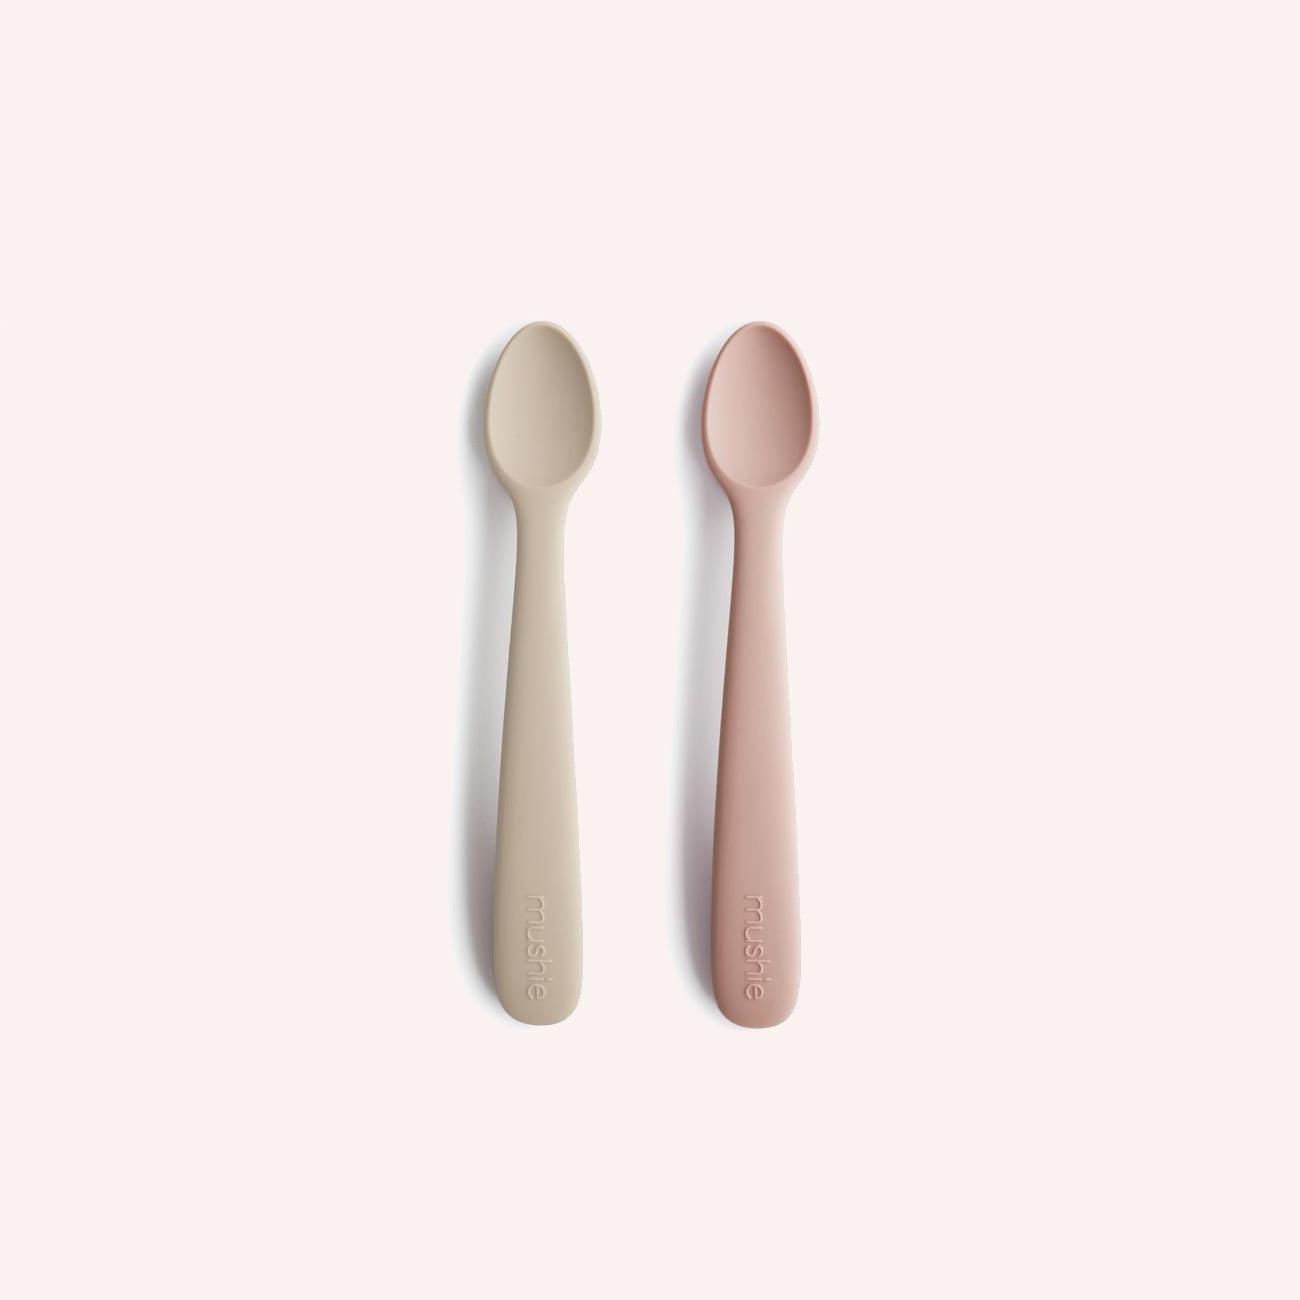 Silicone Feeding Spoon Set (Blush/Shifting Sand)